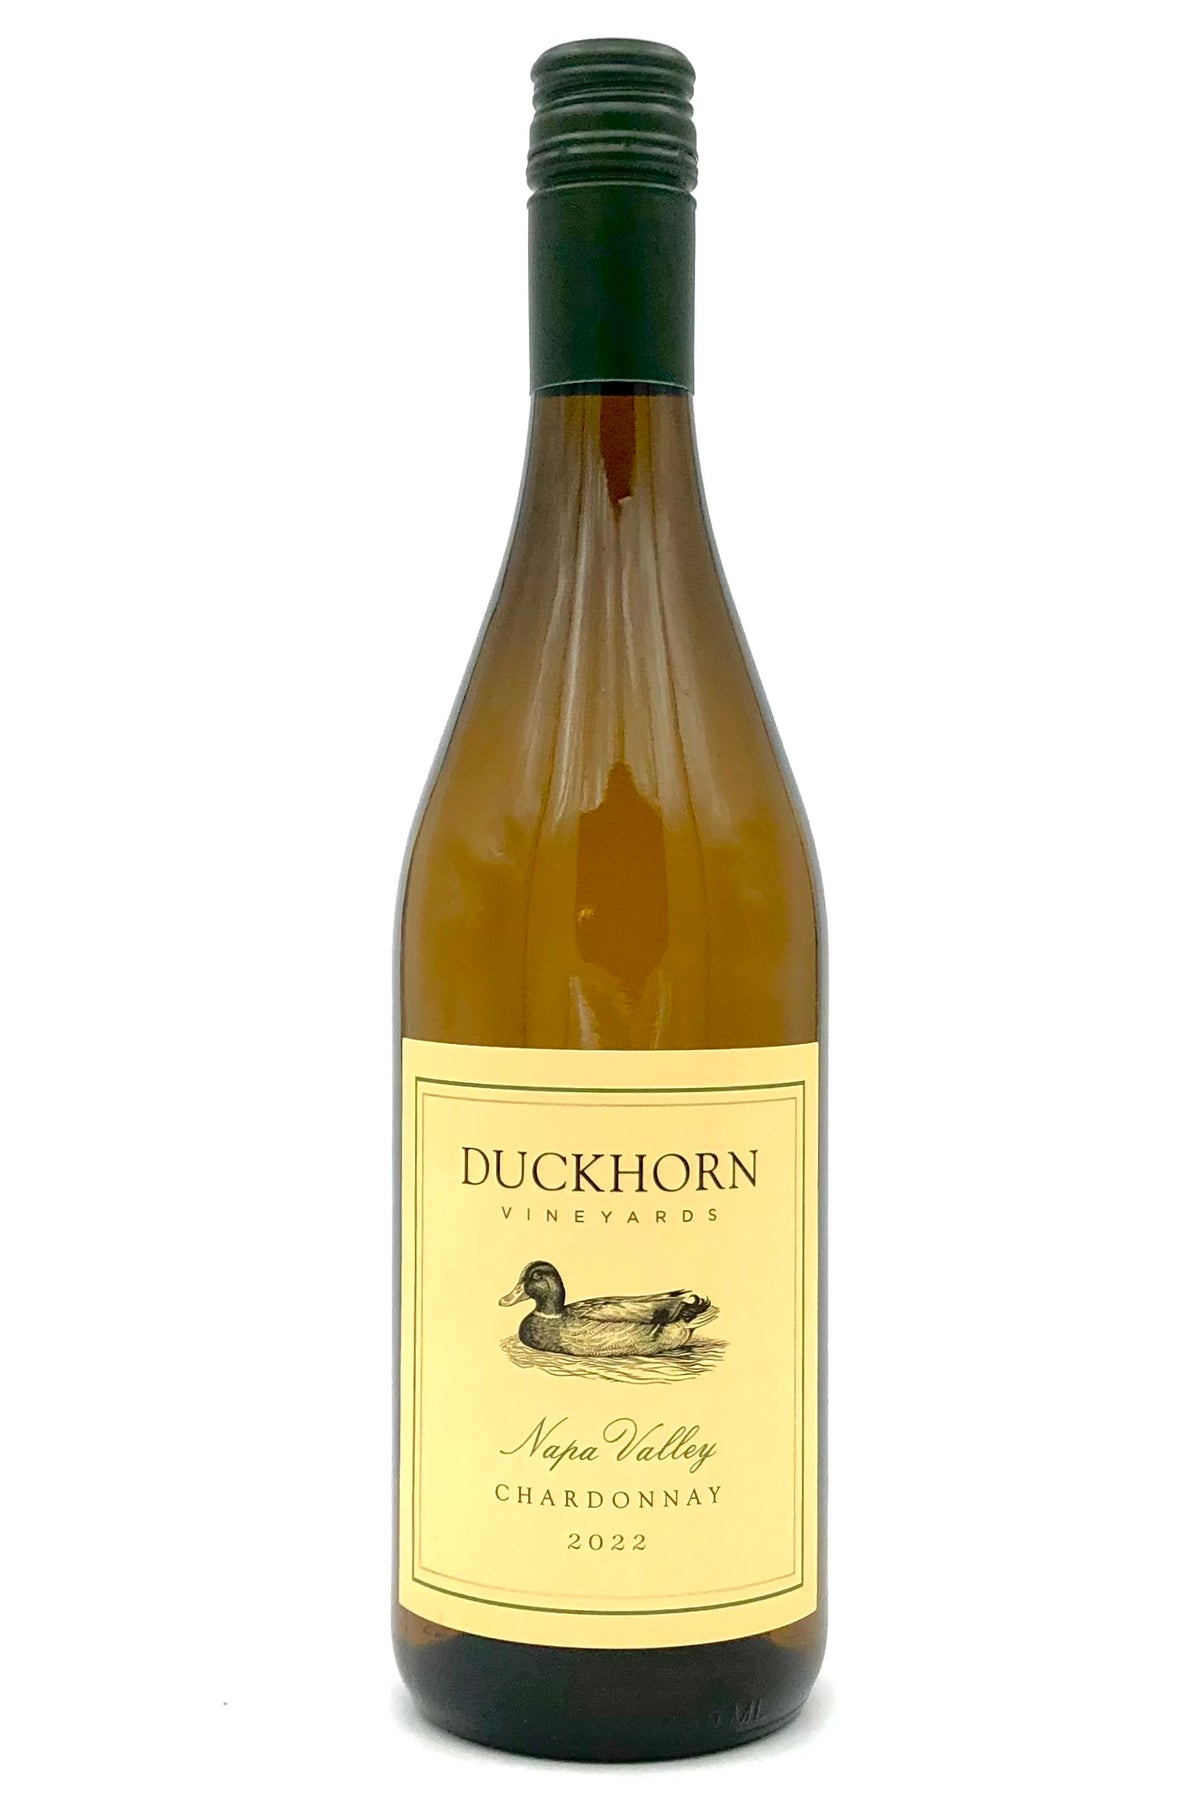 Duckhorn 2022 Chardonnay Napa Valley